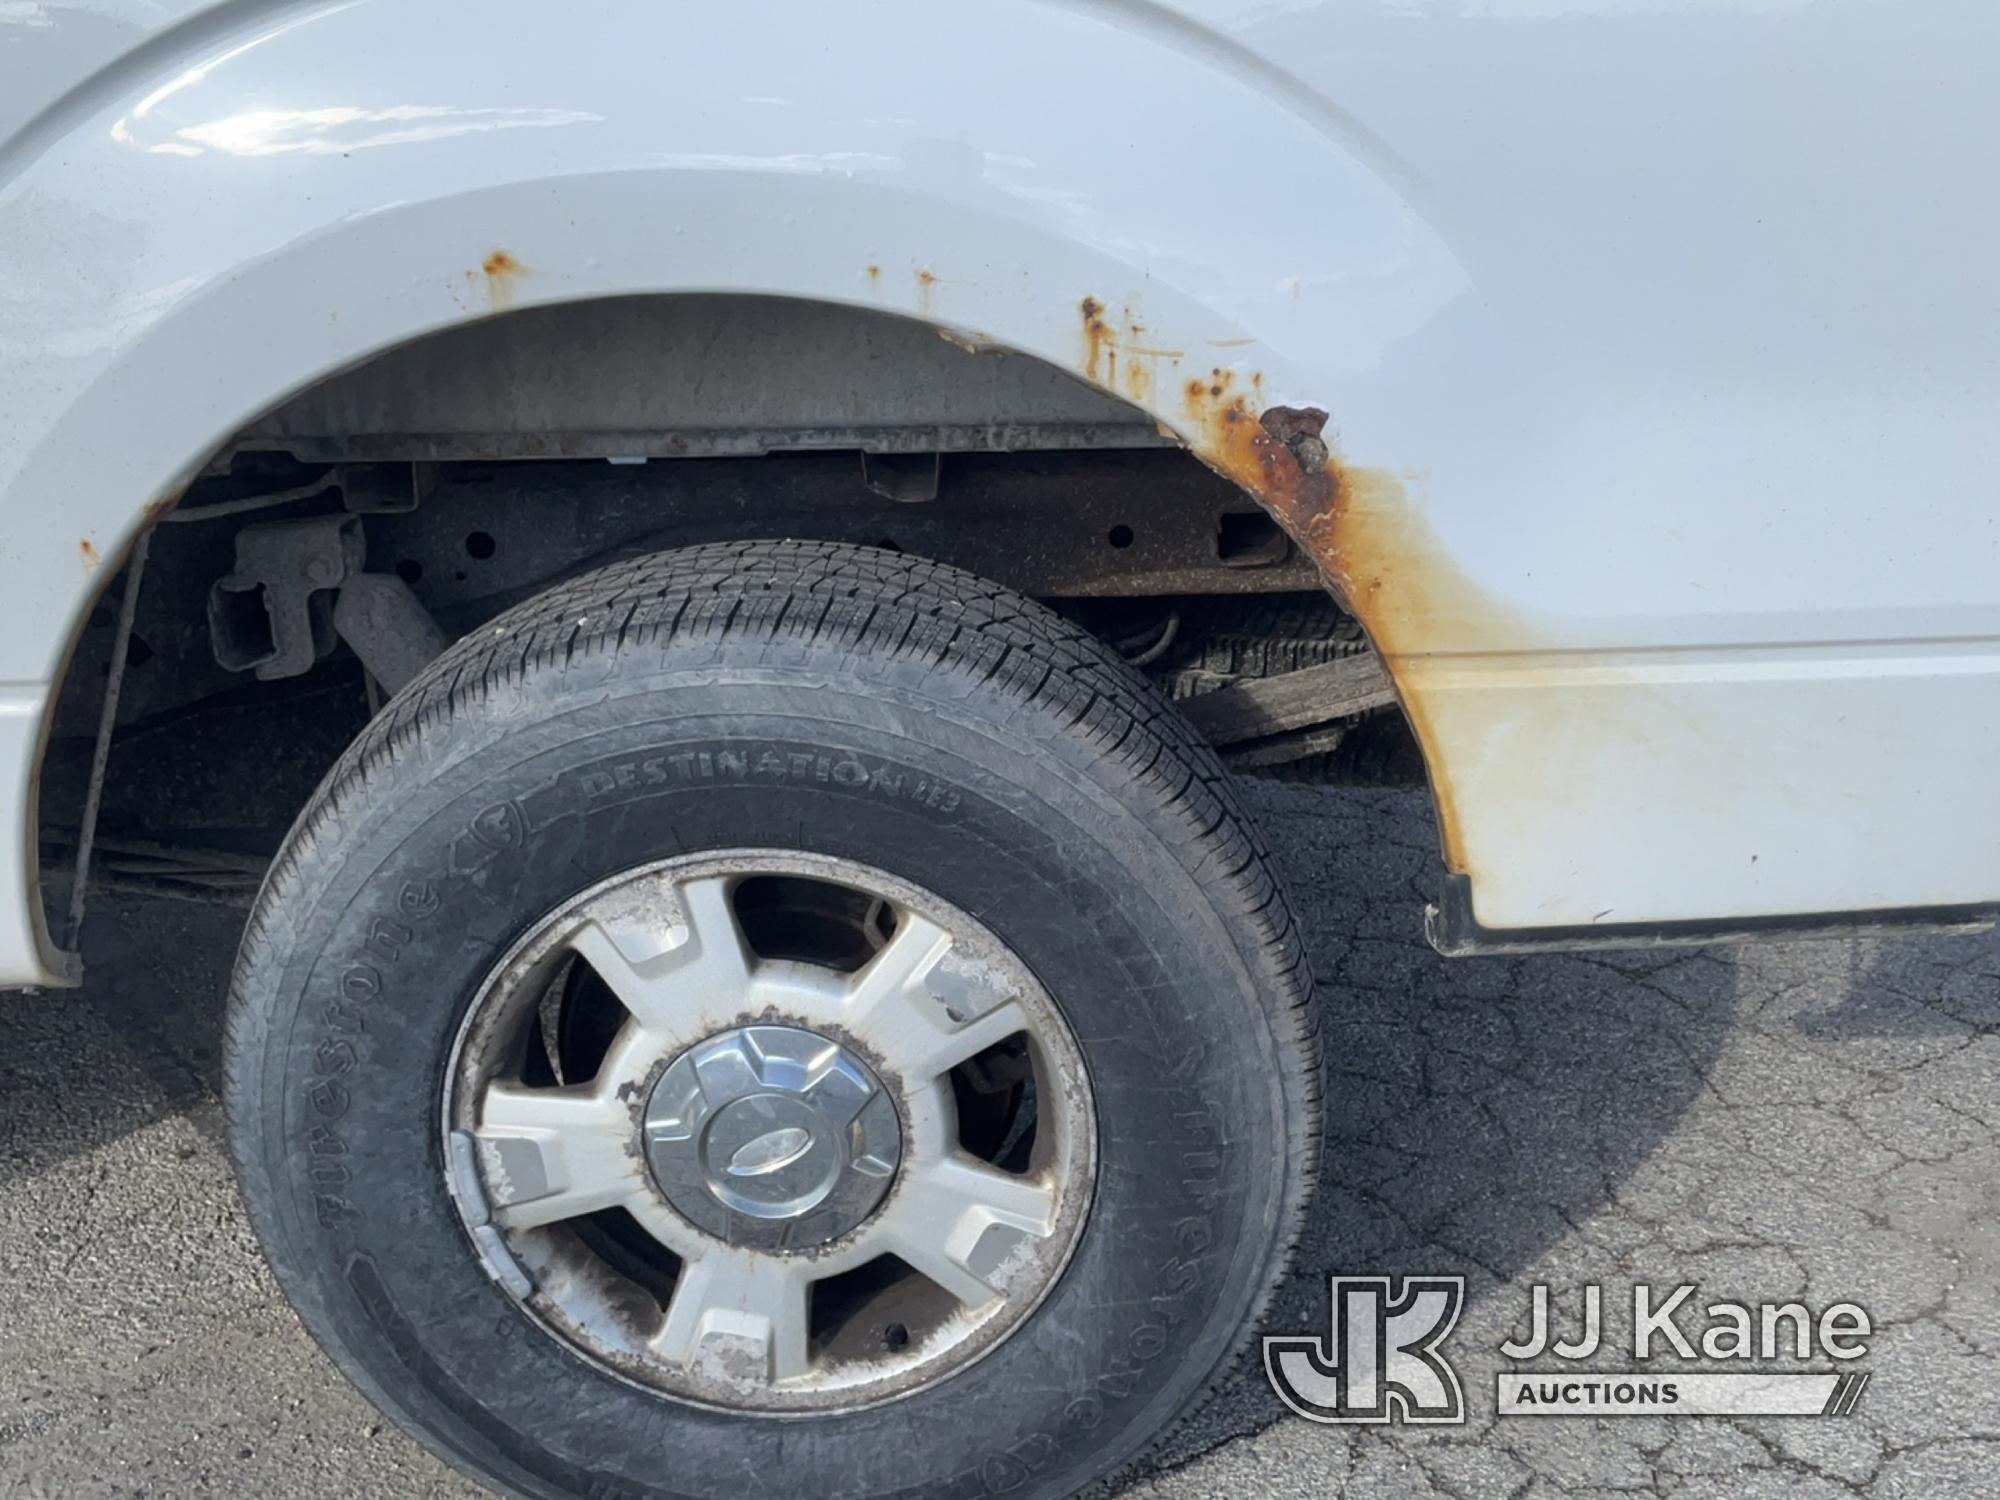 (South Beloit, IL) 2013 Ford F150 4x4 Crew-Cab Pickup Truck Runs & Moves) (Rust Damage